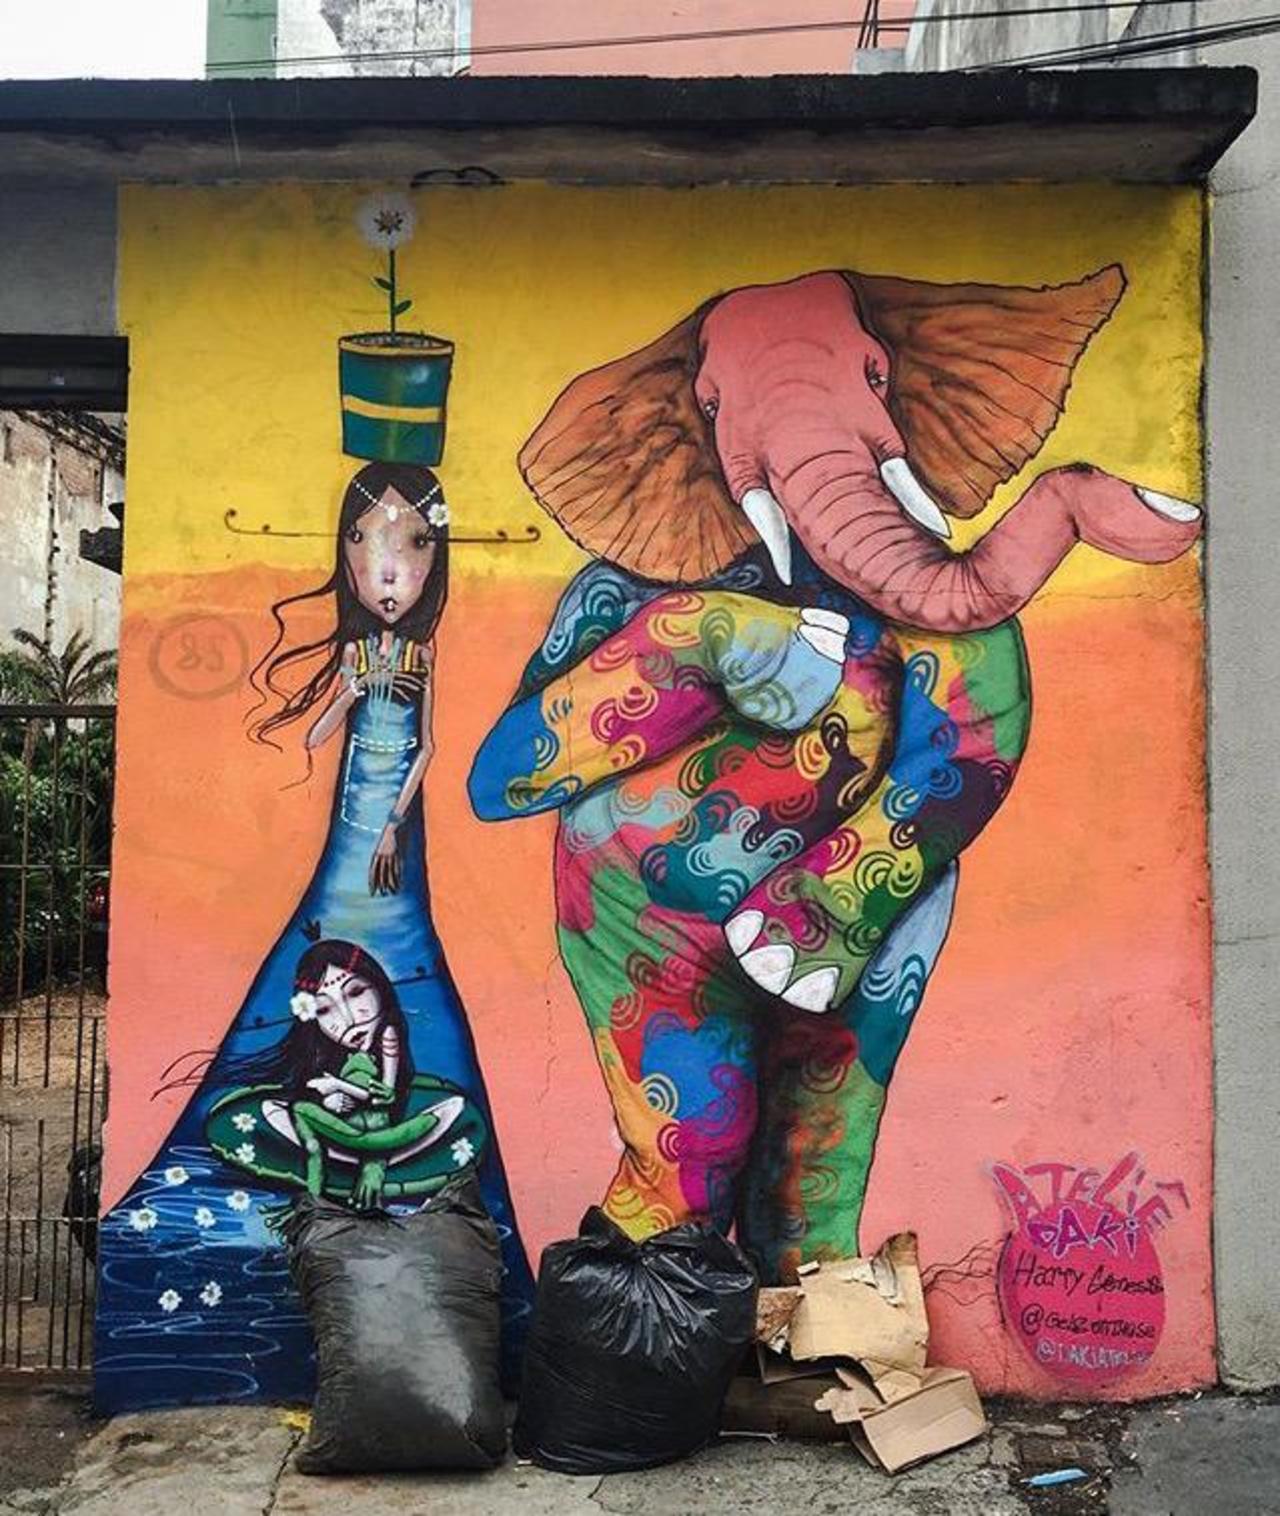 Street Art by Harry Geneis & Gelson in São Paulo #art #mural #graffiti #streetart http://t.co/SlLbhuMZfD … … … …… http://twitter.com/GoogleStreetArt/status/648016473831645184/photo/1/large?utm_source=fb&utm_medium=fb&utm_campaign=charlesjackso14&utm_content=648025285804335104